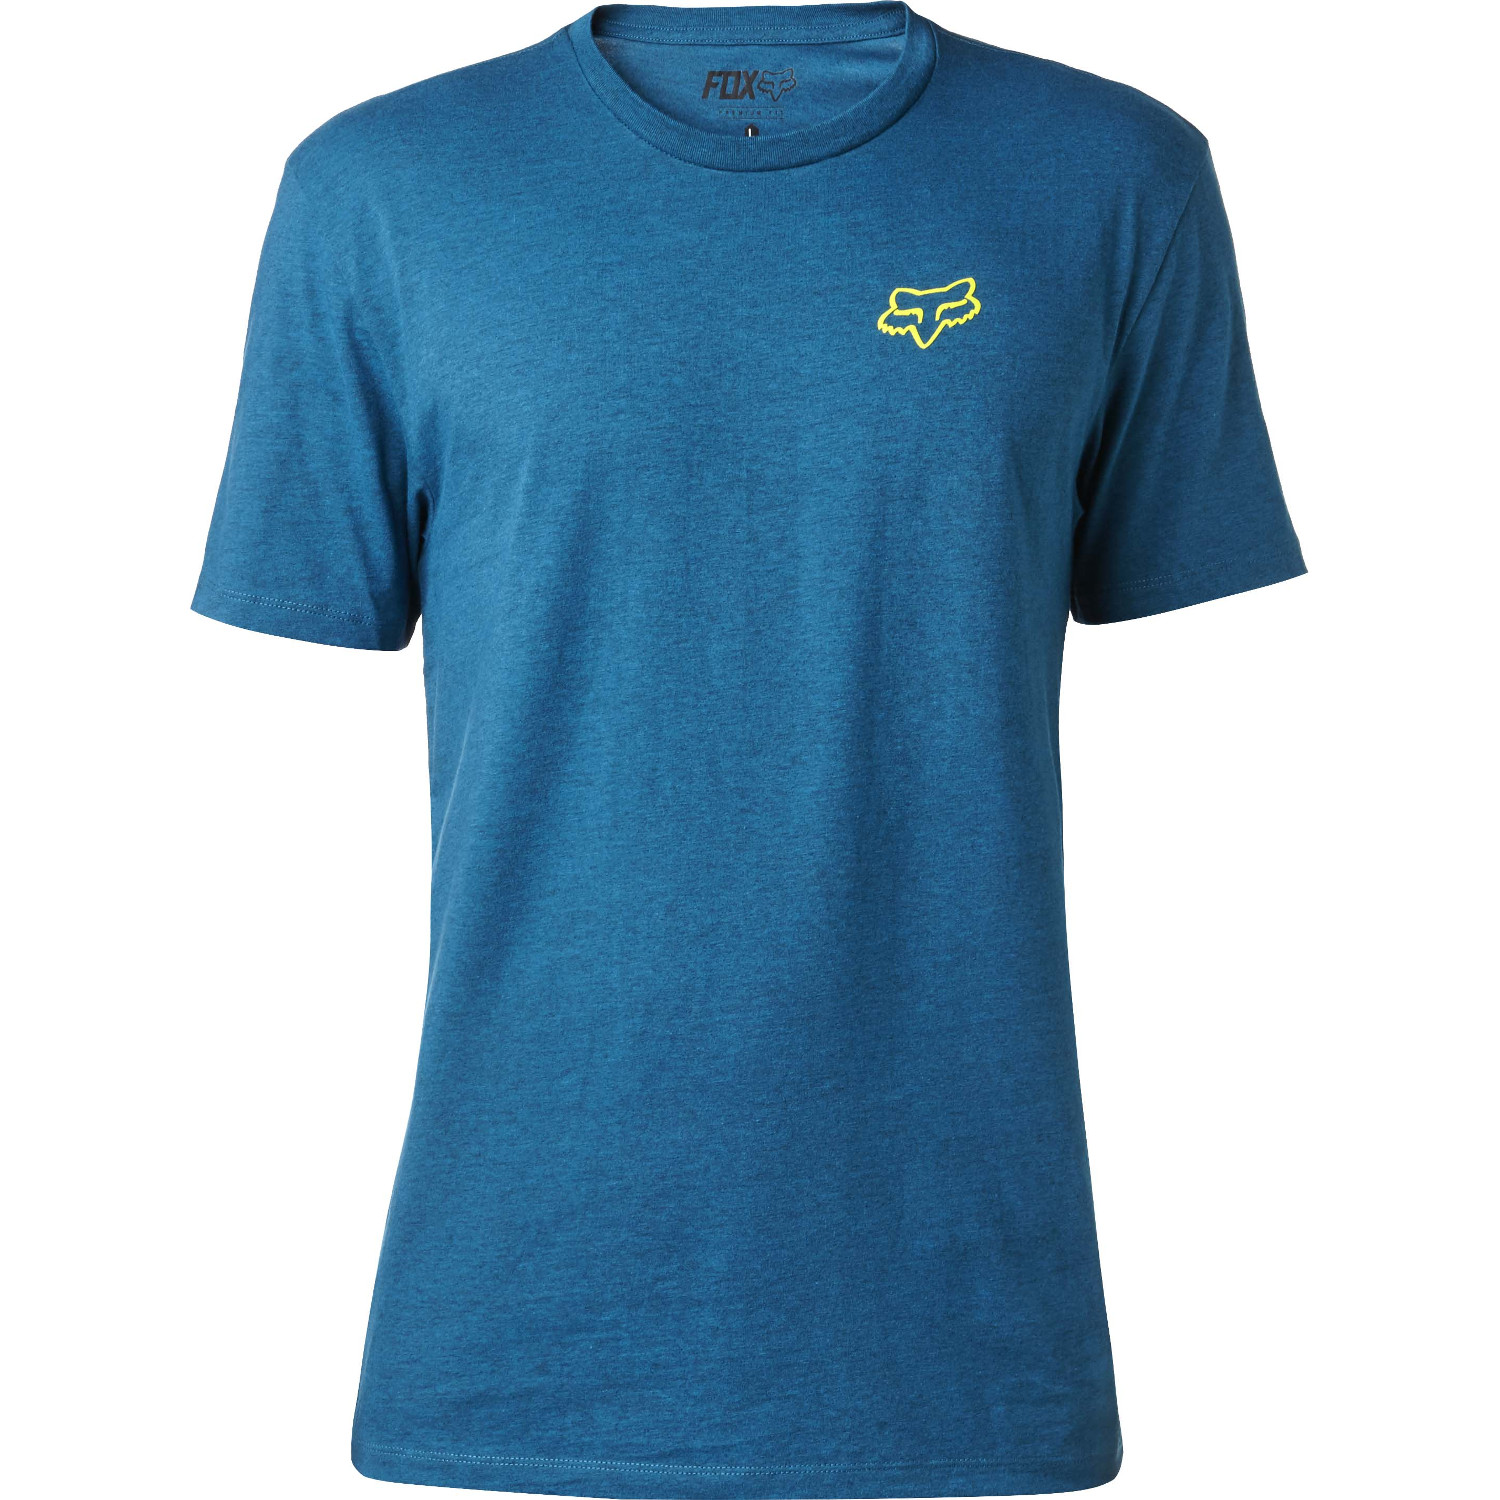 Fox T-Shirt Observed Premium Maui Blau meliert